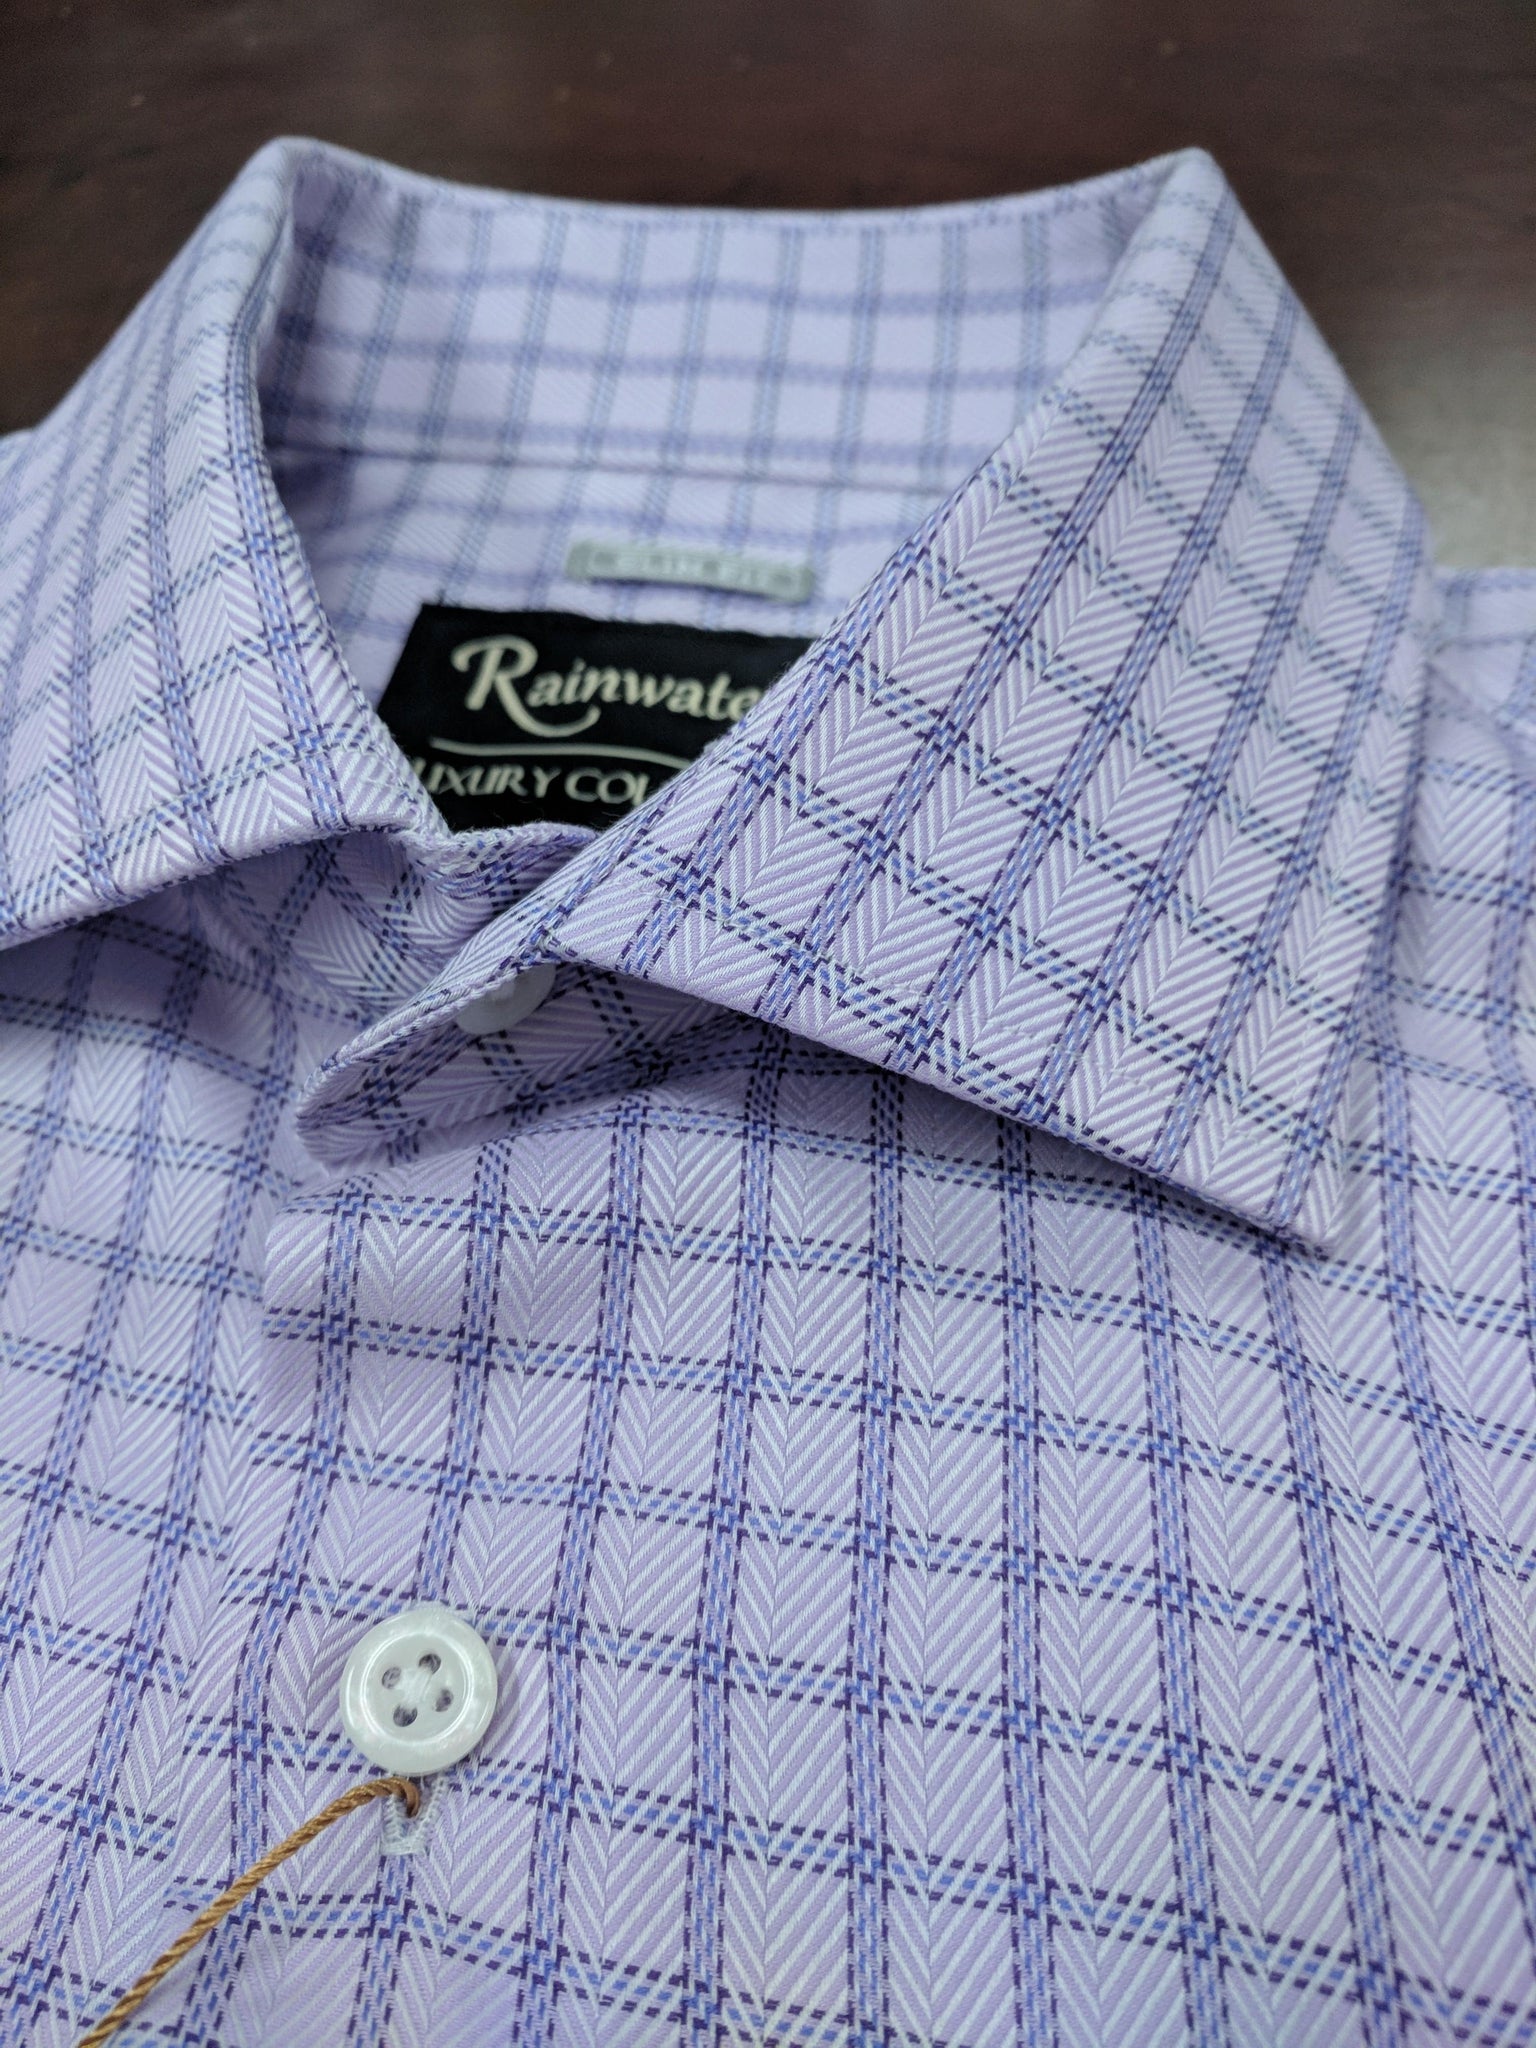 Rainwater's 100% Cotton Non-Iron Lavender Check Slim Fit Dress Shirt - Rainwater's Men's Clothing and Tuxedo Rental